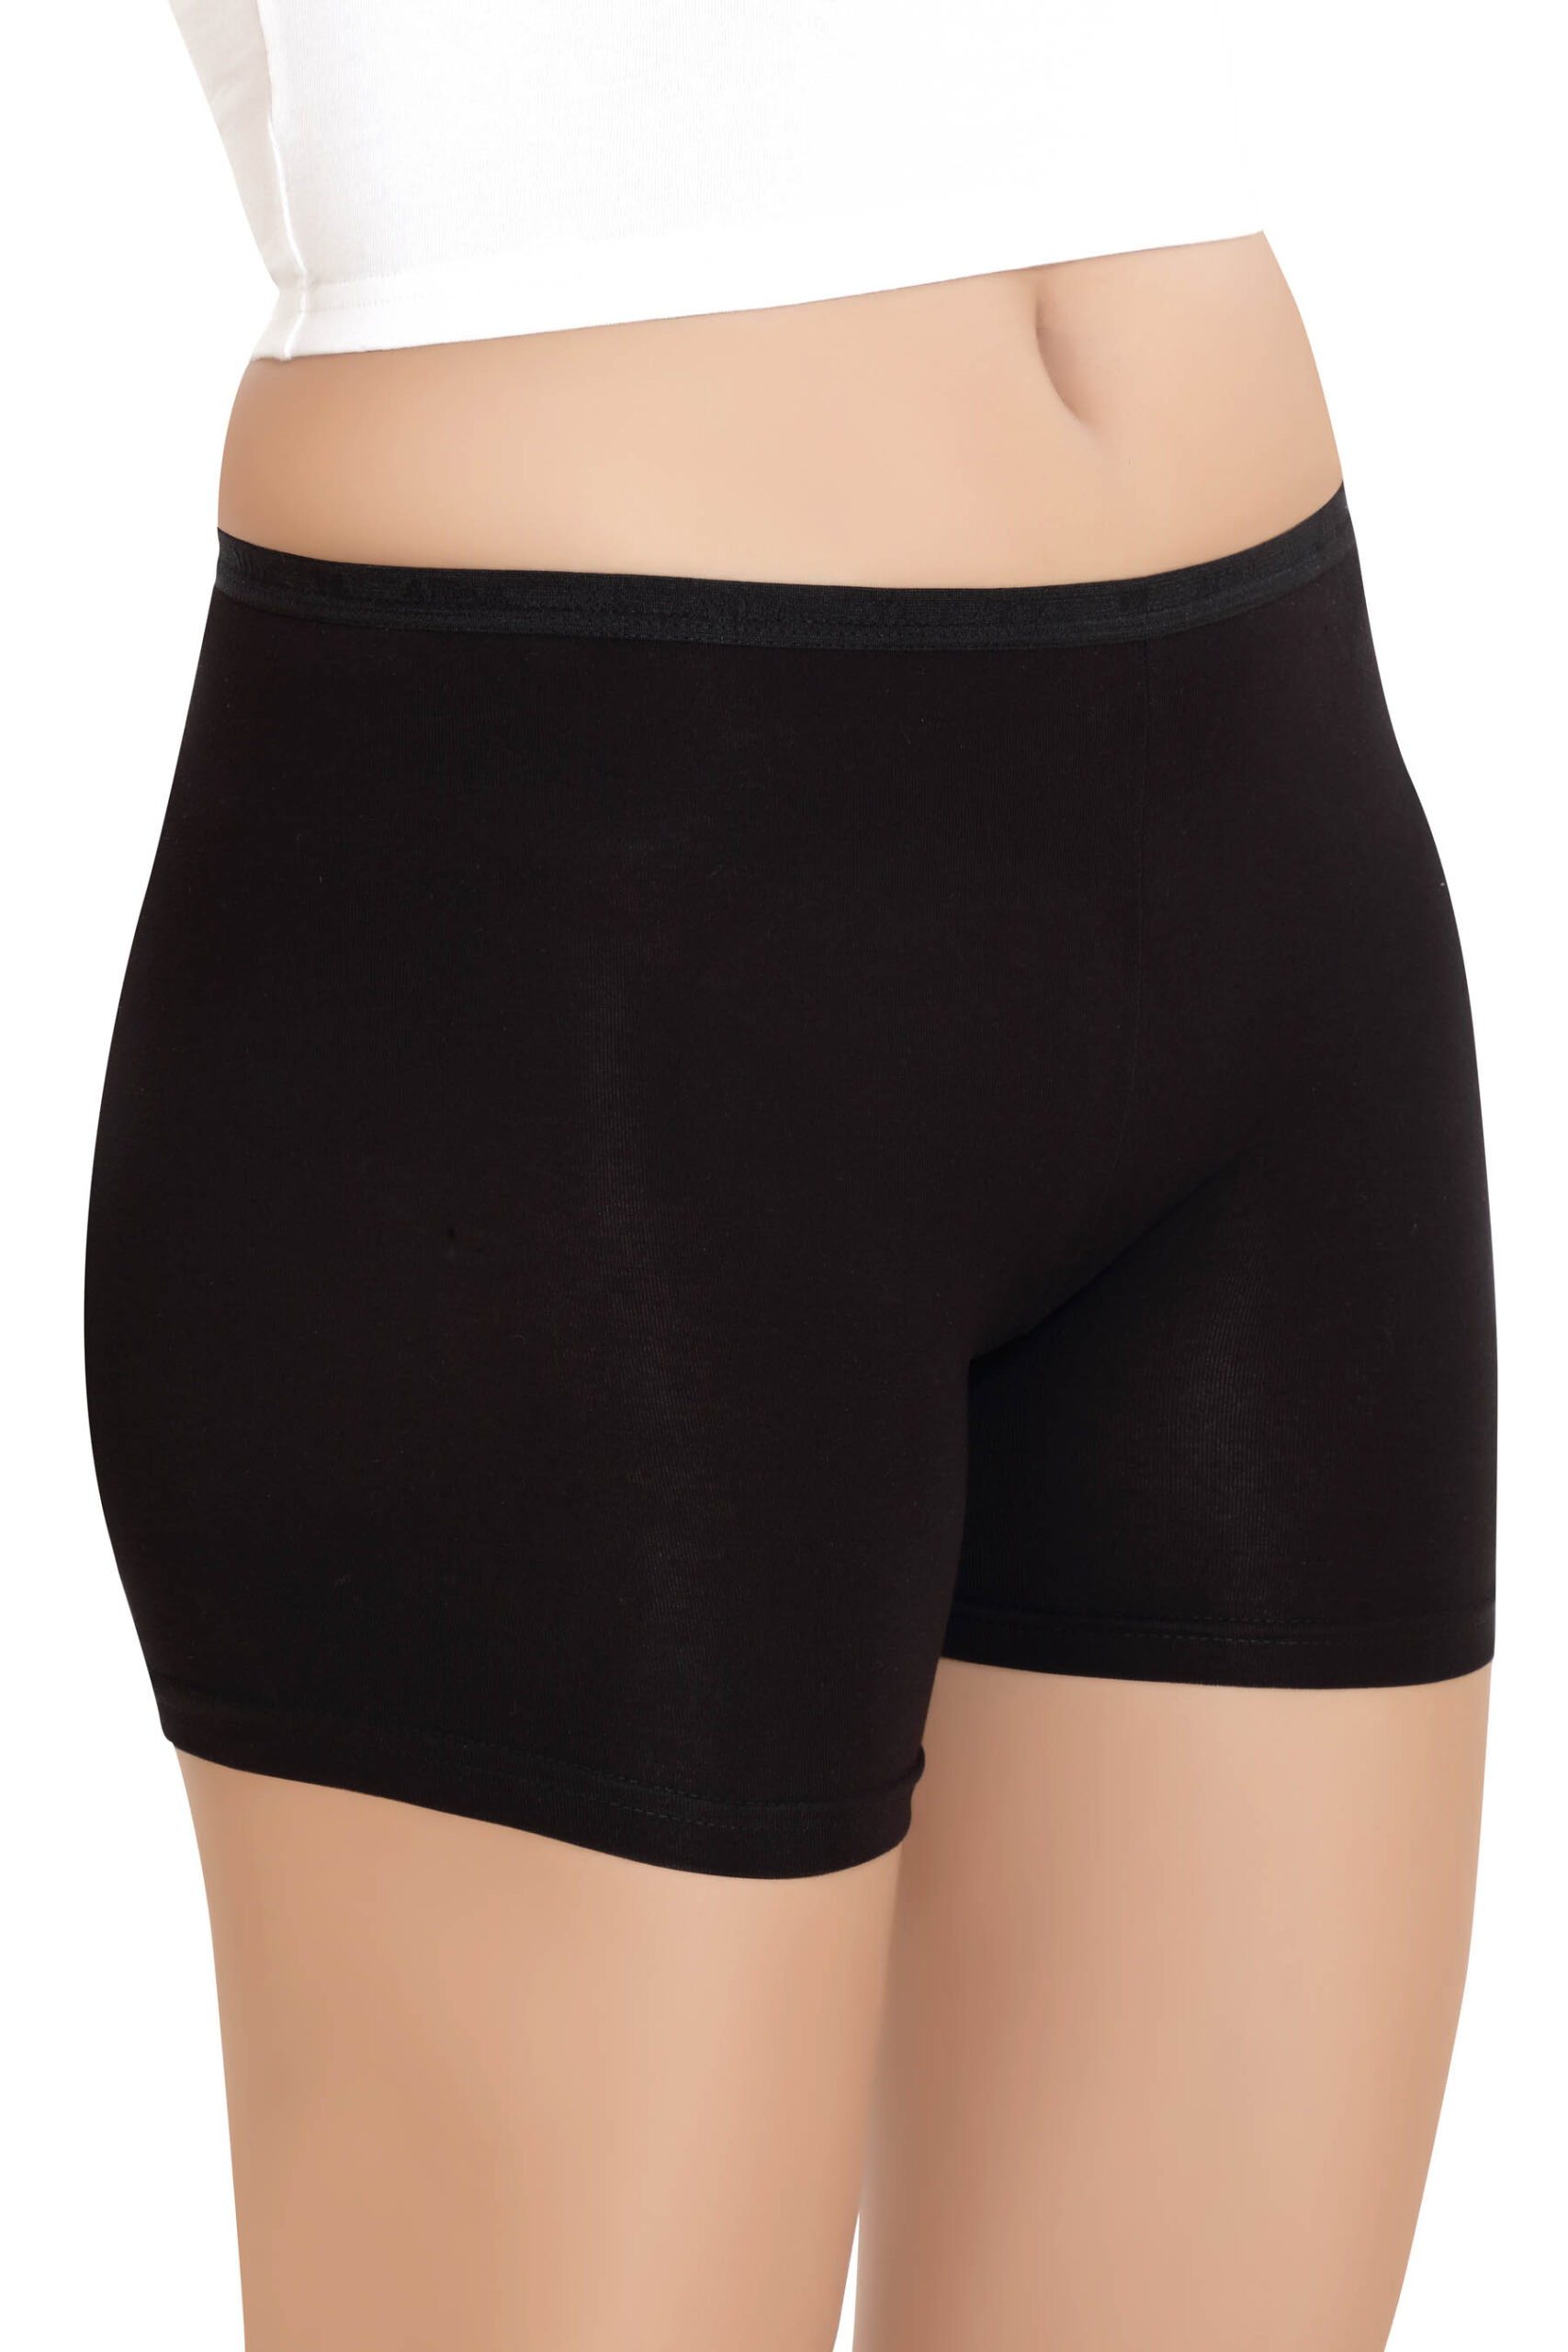 Alies Boy Shorts Underwear for Women Boyshorts Panties Boxer Briefs Smooth  Slip Short Panty